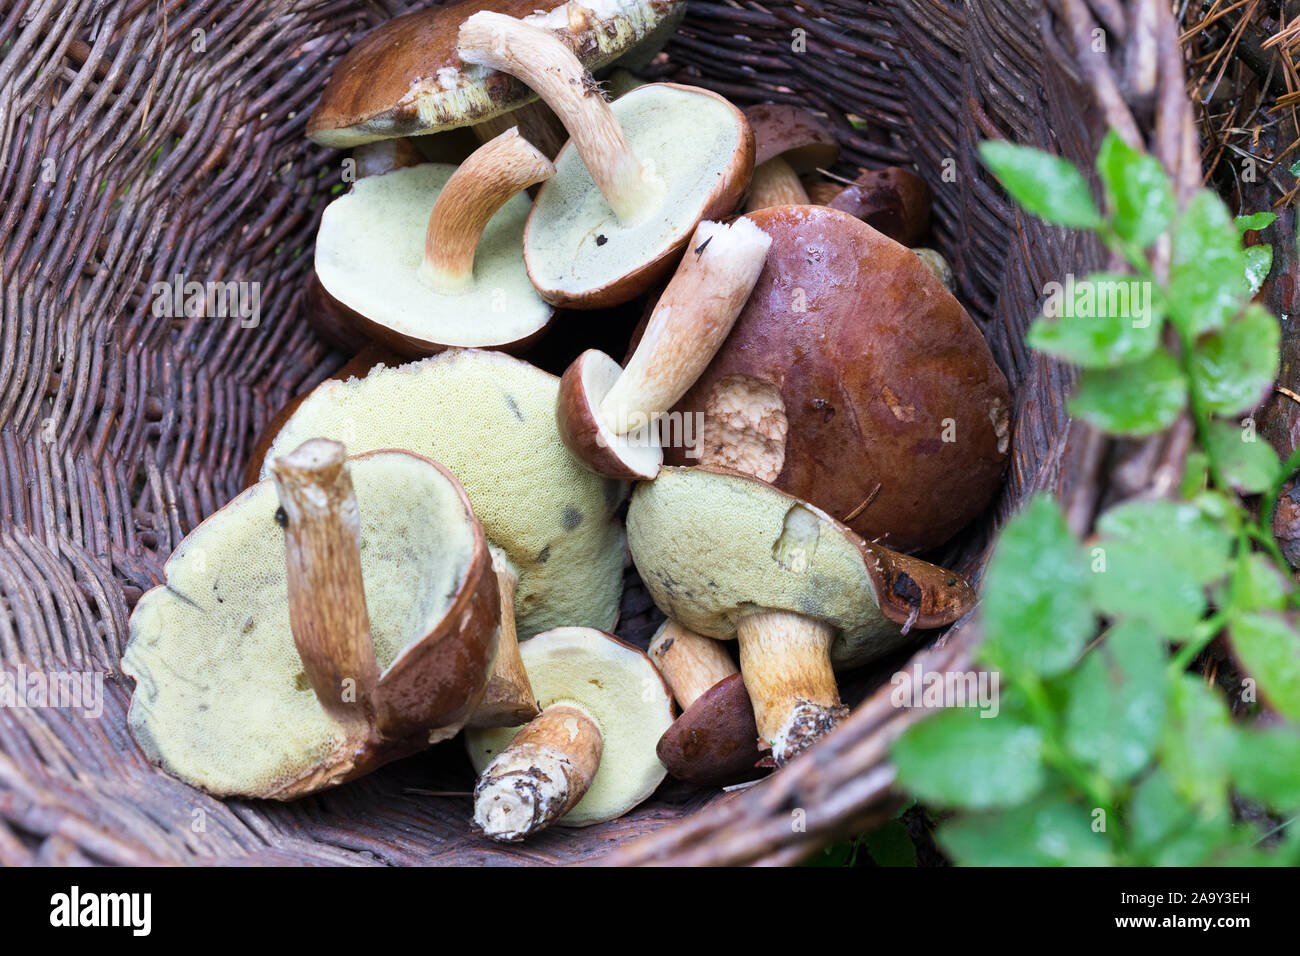 houby v proutěném košíku - boletus in the wicker creel - mushroom picking  Stock Photo - Alamy